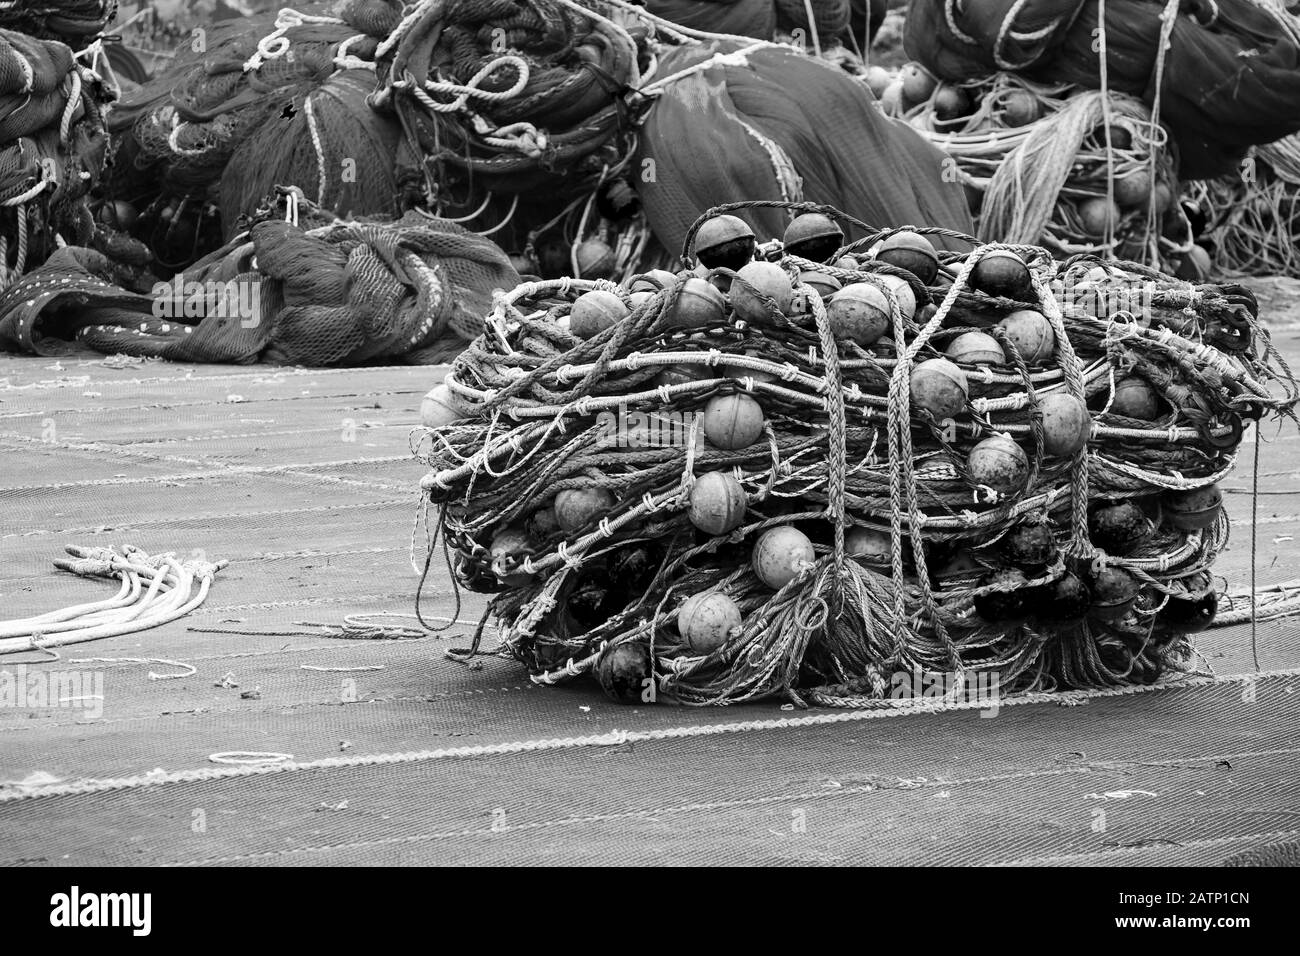 Netting fishing Black and White Stock Photos & Images - Alamy